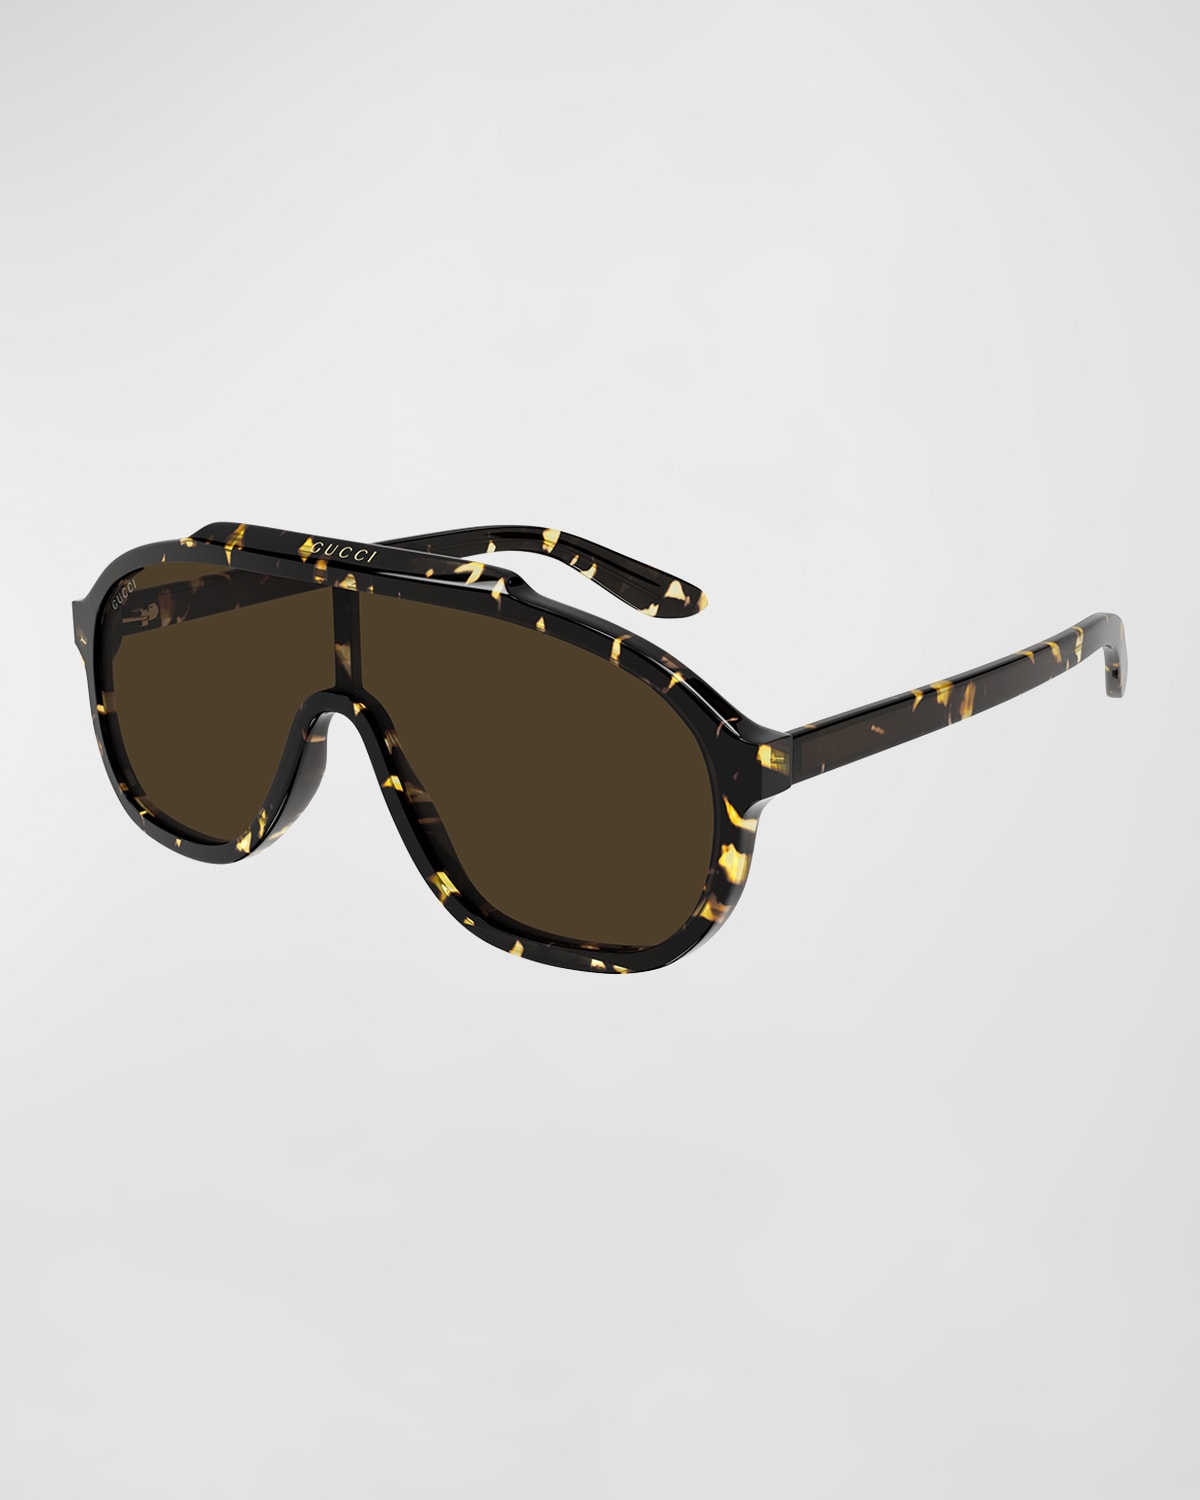 Gucci Men's Acetate Aviator Sunglasses